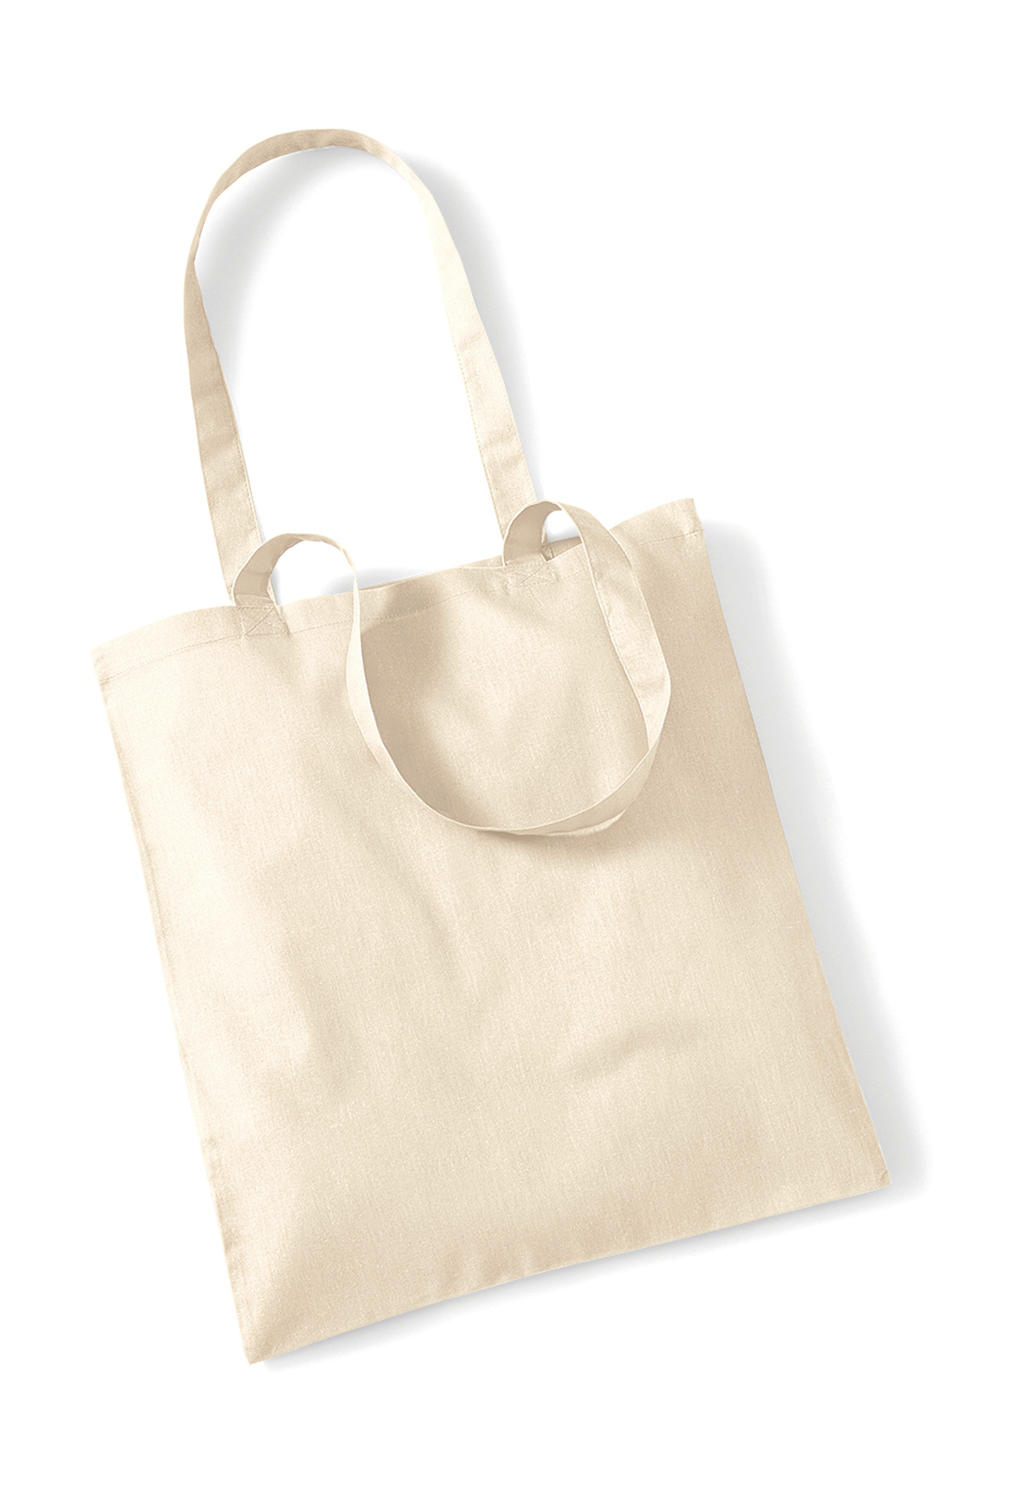  Bag for Life - Long Handles in Farbe Natural